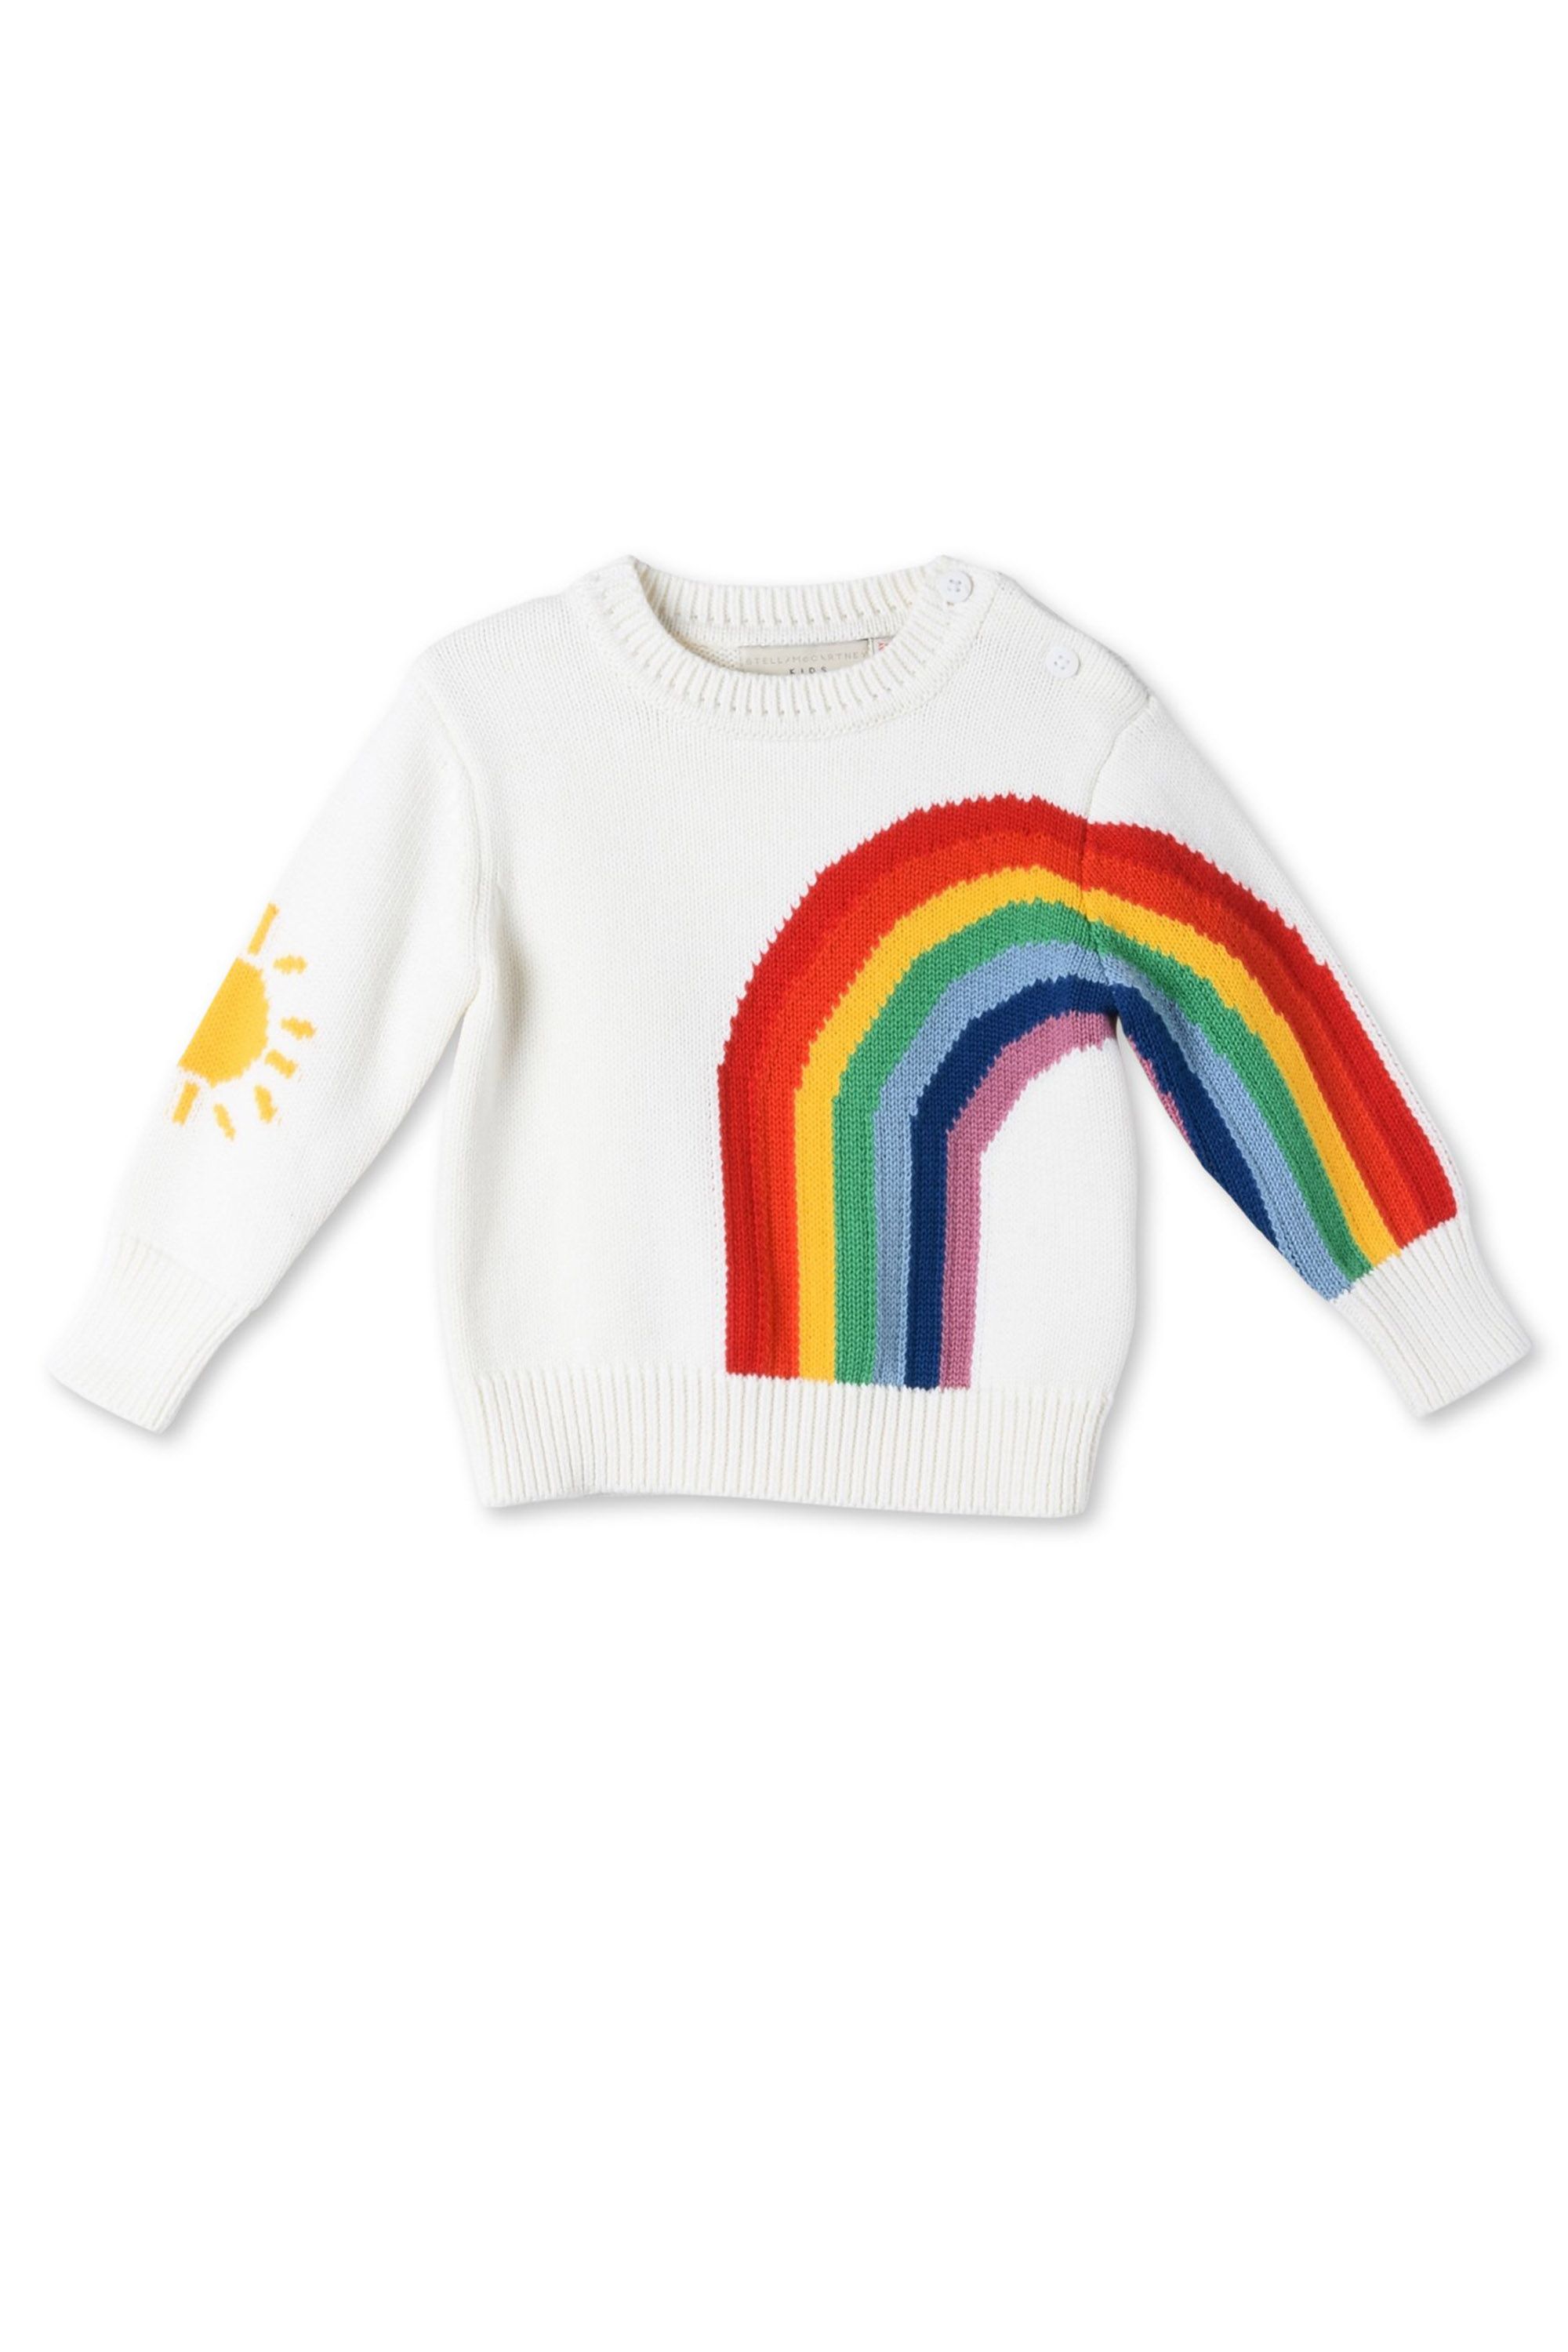 Best Designer Baby Clothes for Girls & Boys